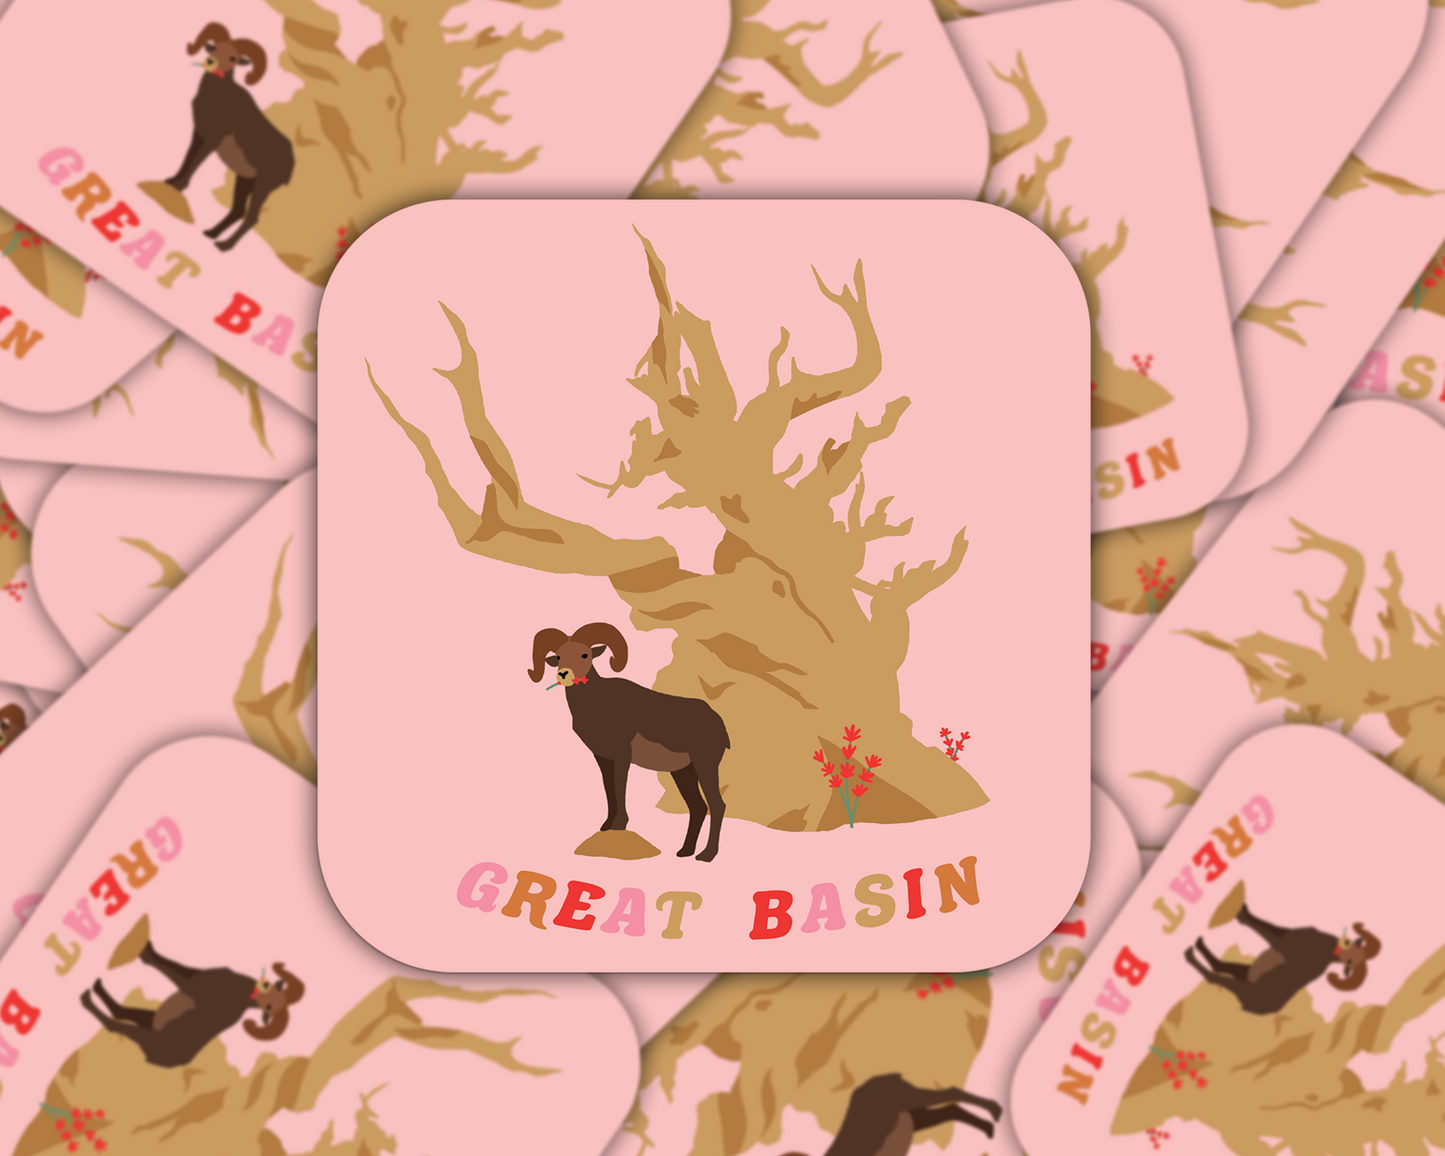 Great Basin Vinyl Sticker